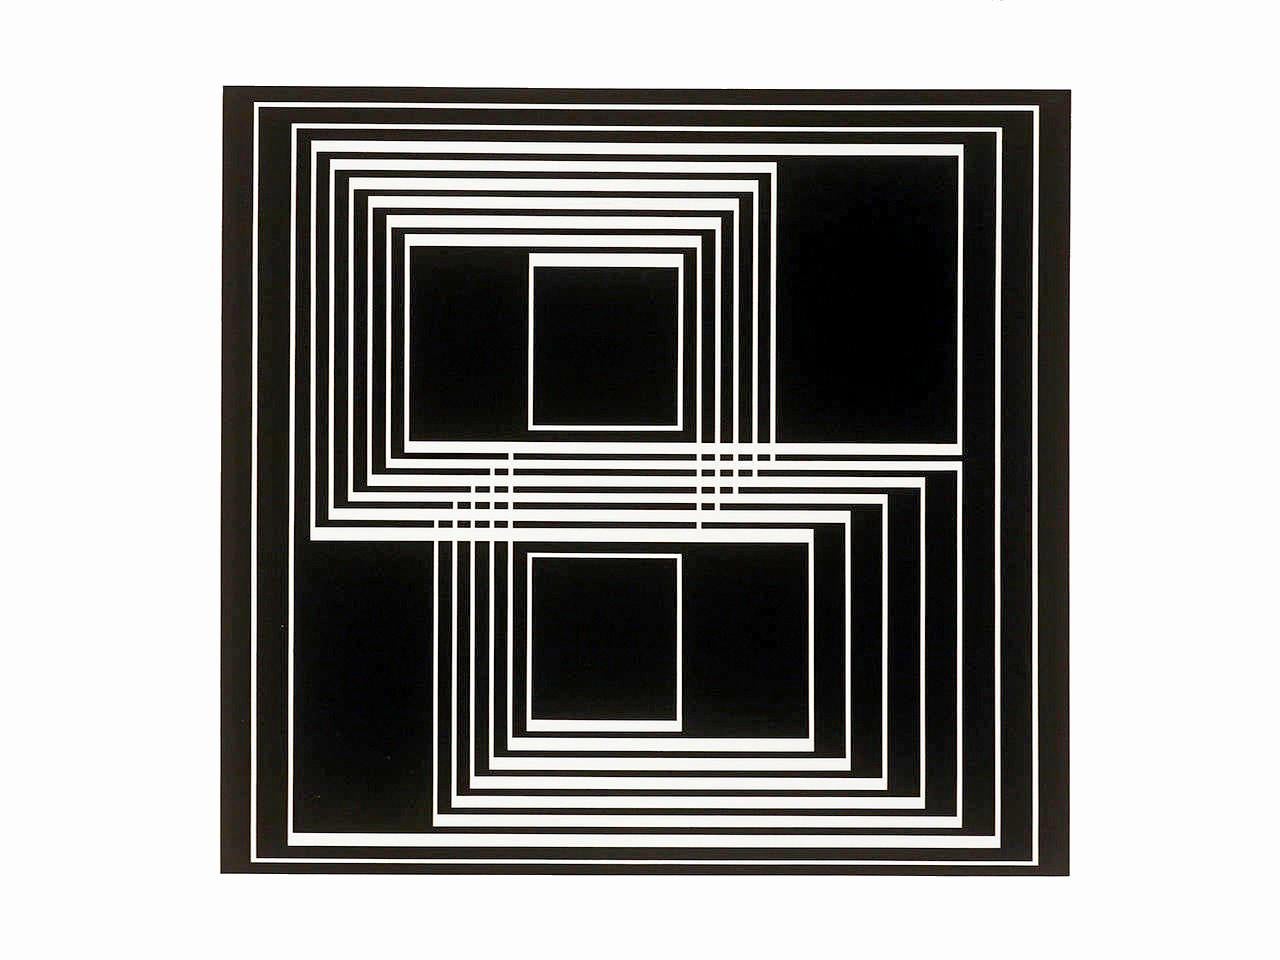 Josef Albers Abstract Print - "Formulation : Articulation, " Portfolio I Folder 33